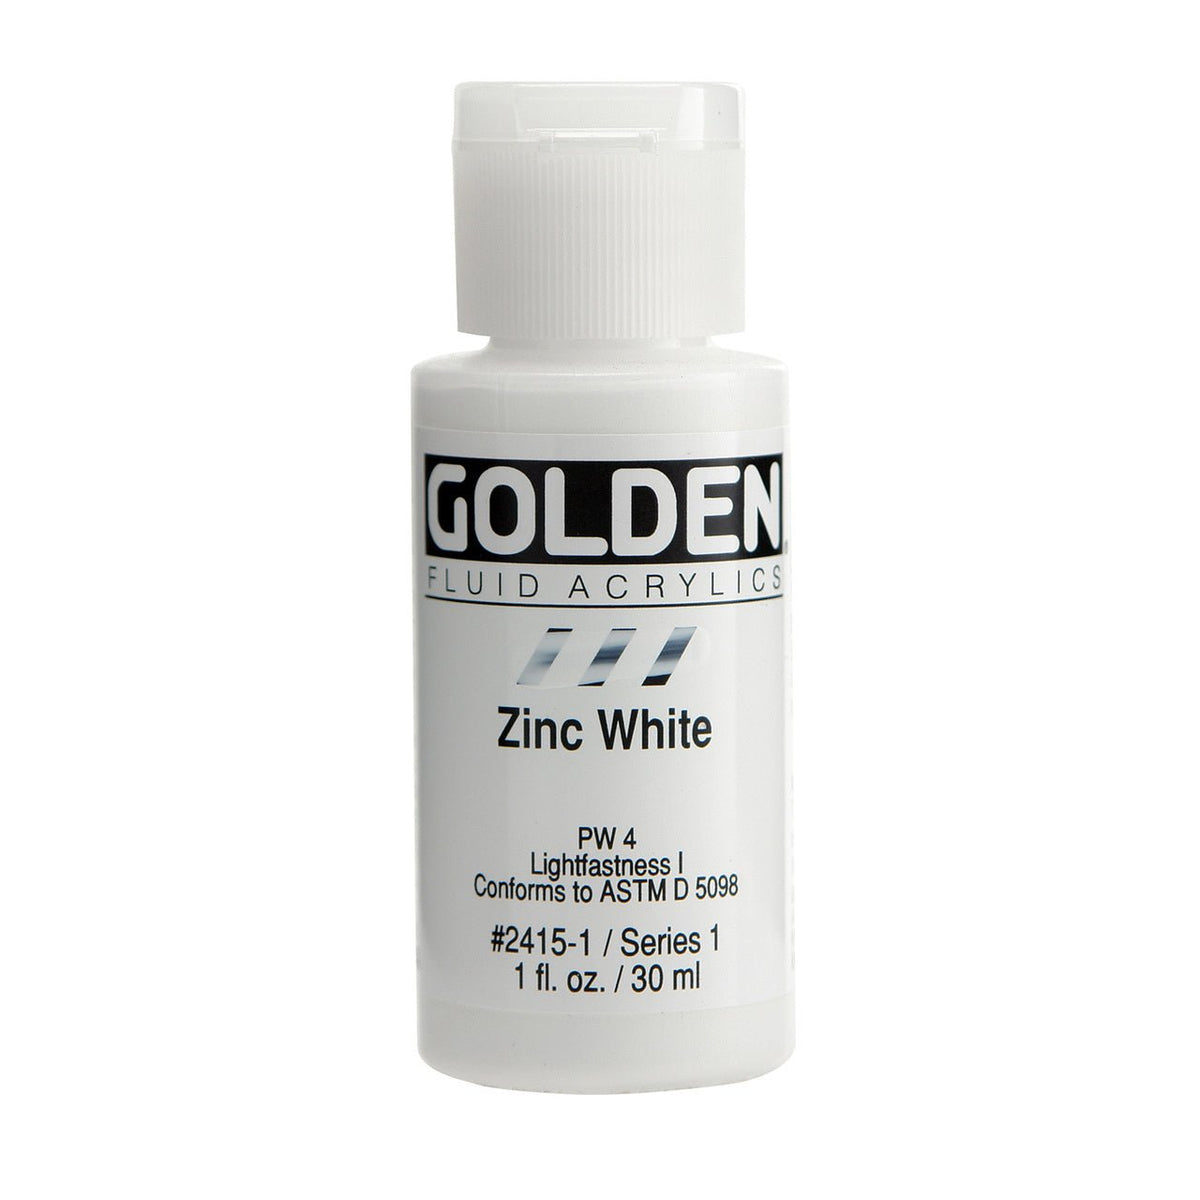 Golden Fluid Acrylic Zinc White 1 oz - merriartist.com